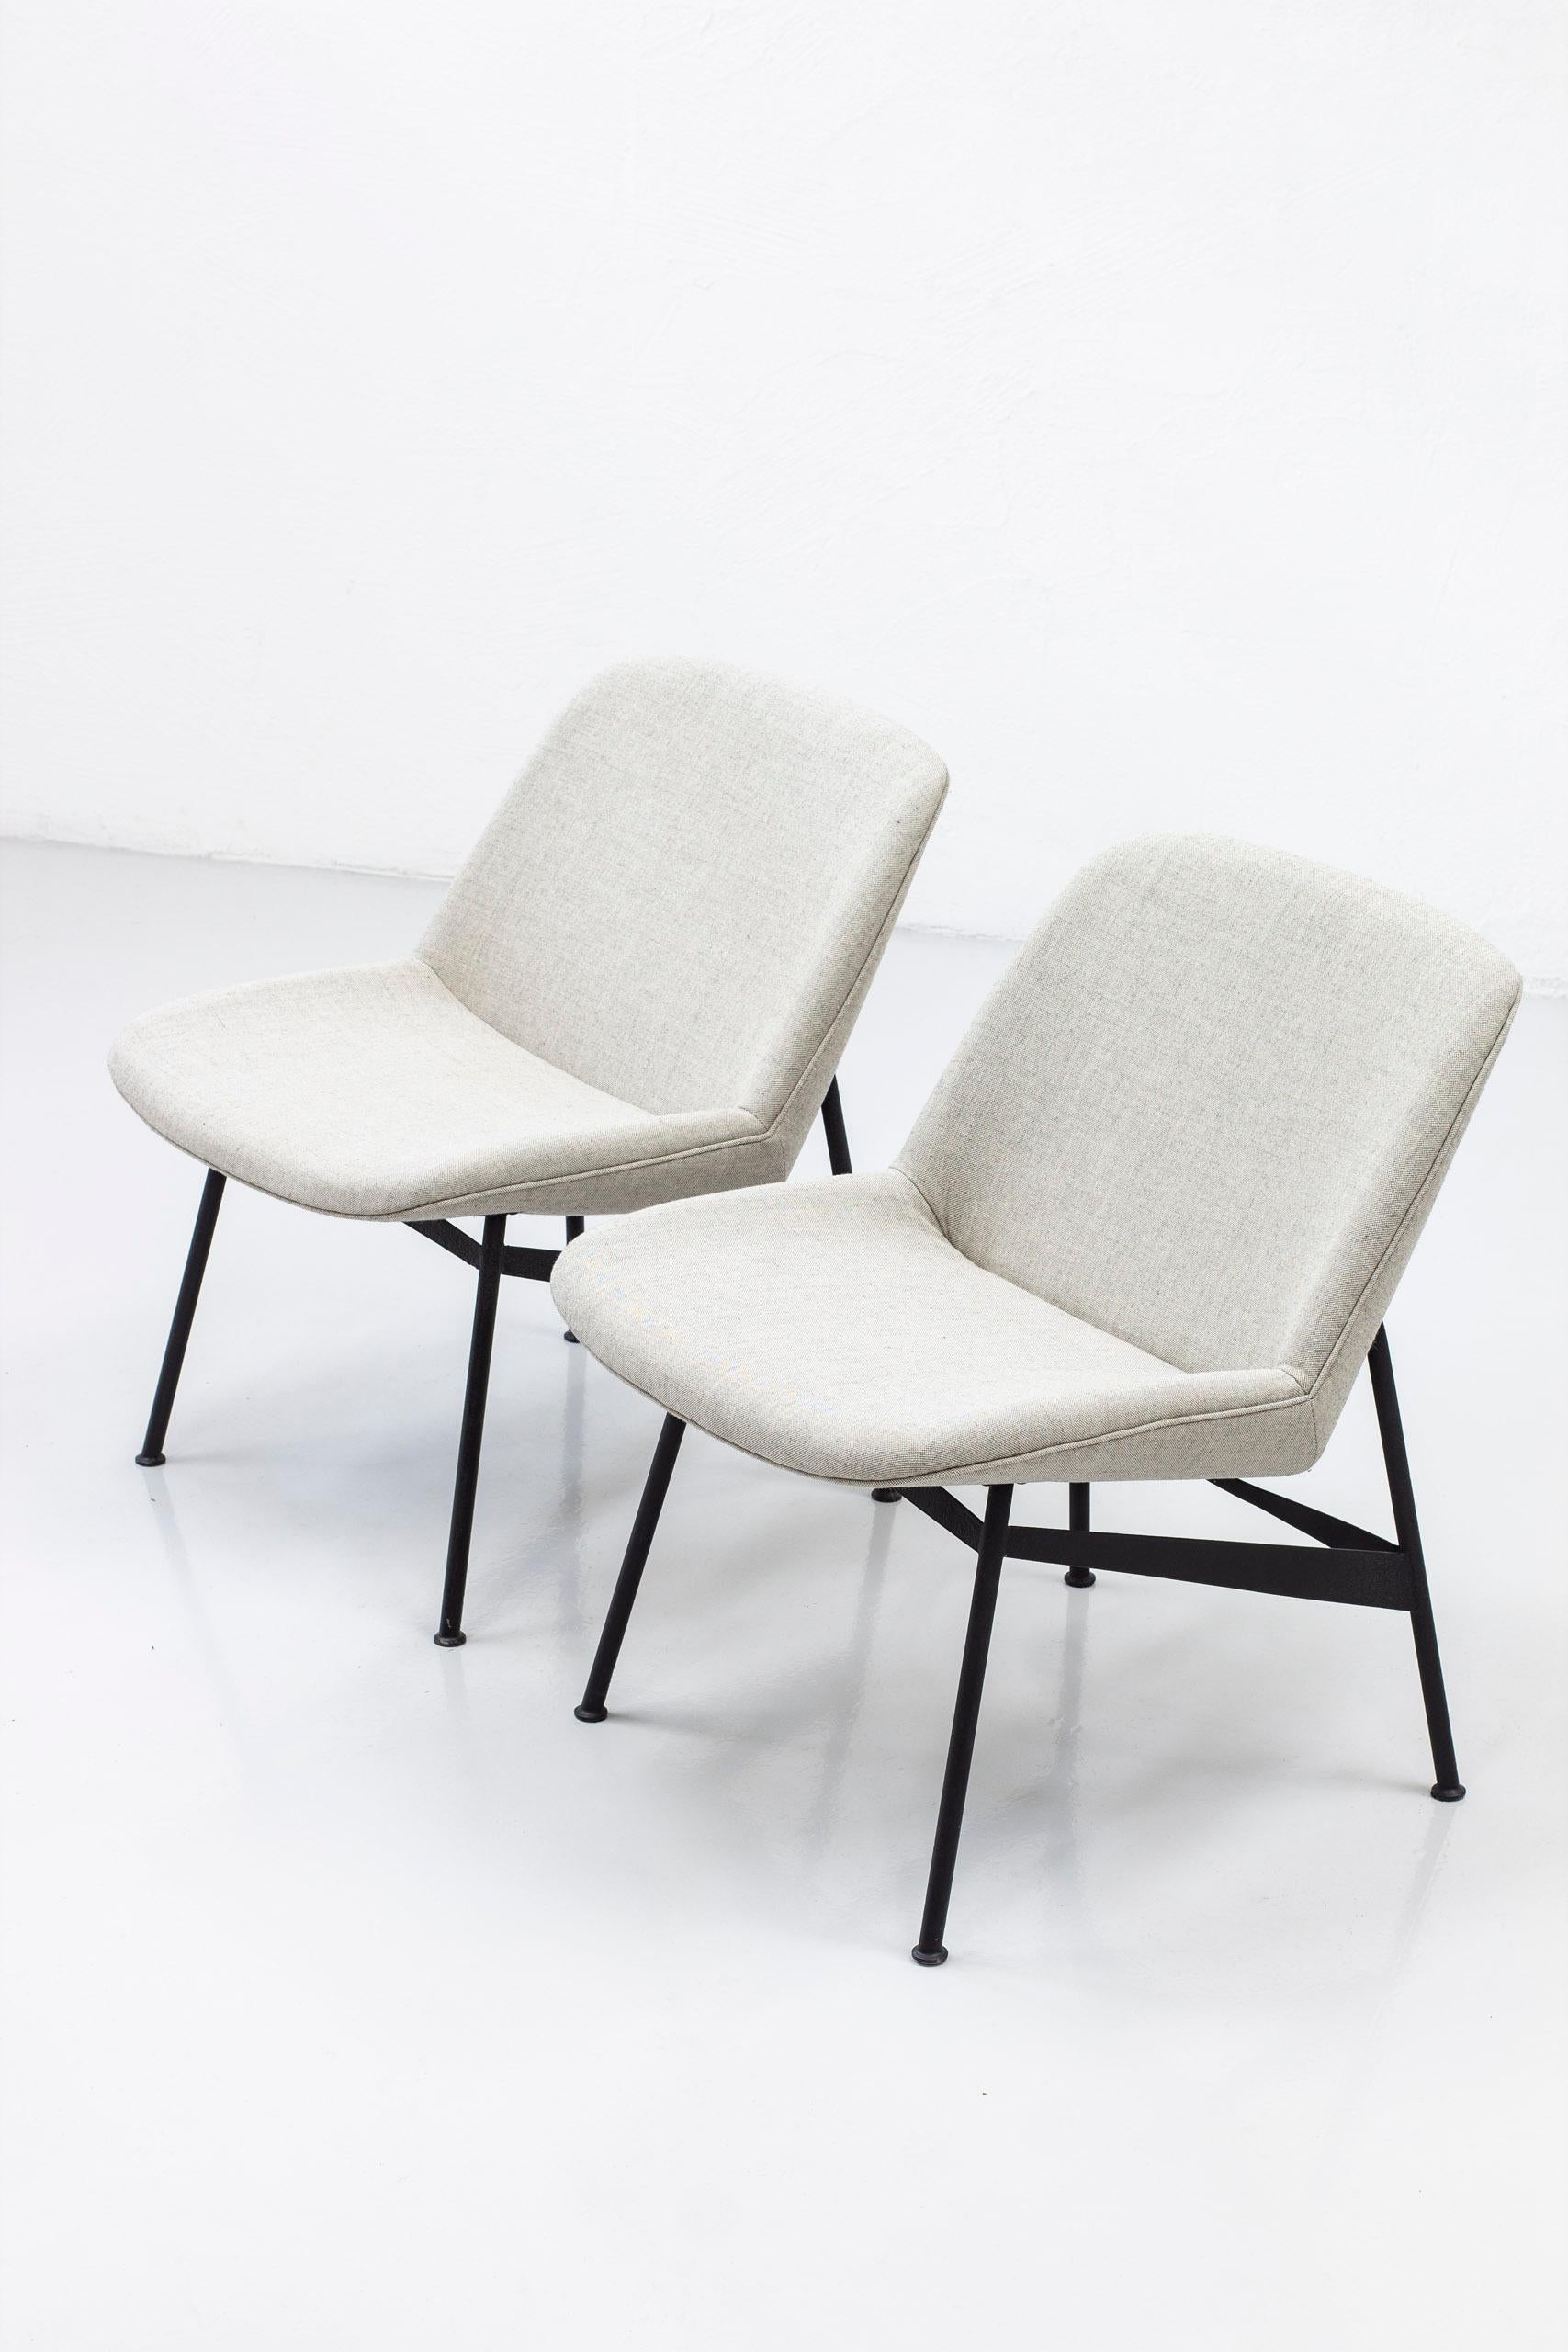 Steel Swedish Lounge Chairs by Hans Harald Molander for Nordiska Kompaniet, NK 1950s For Sale